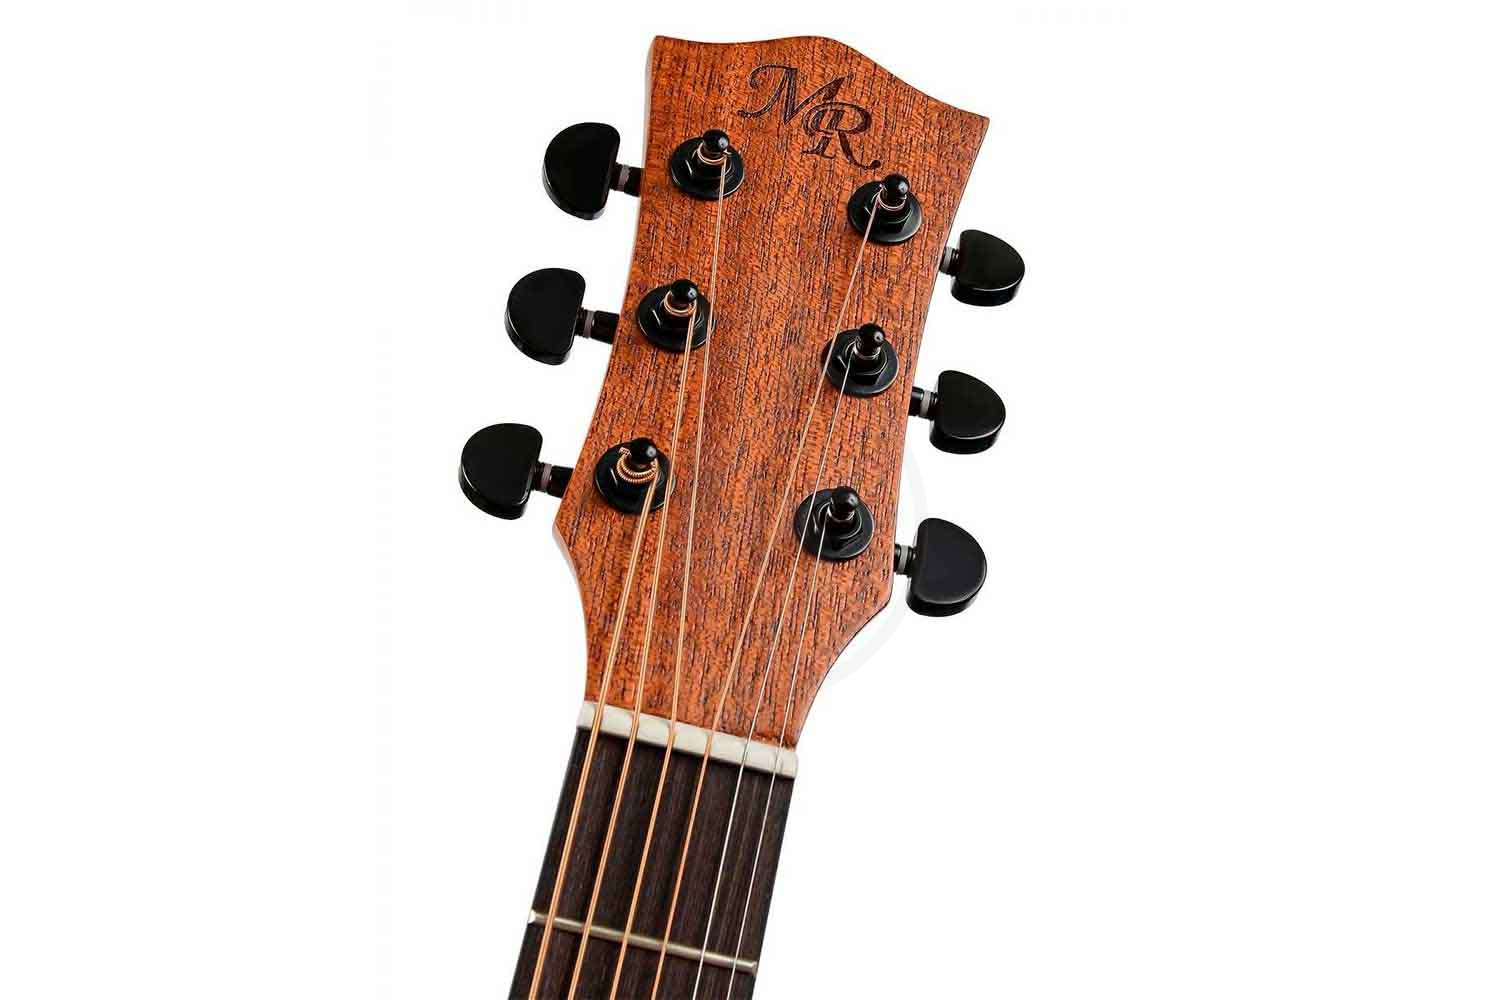 Акустическая гитара Акустические гитары Martin Romas MARTIN ROMAS MR-41F - акустическая гитара MR-41F - фото 3